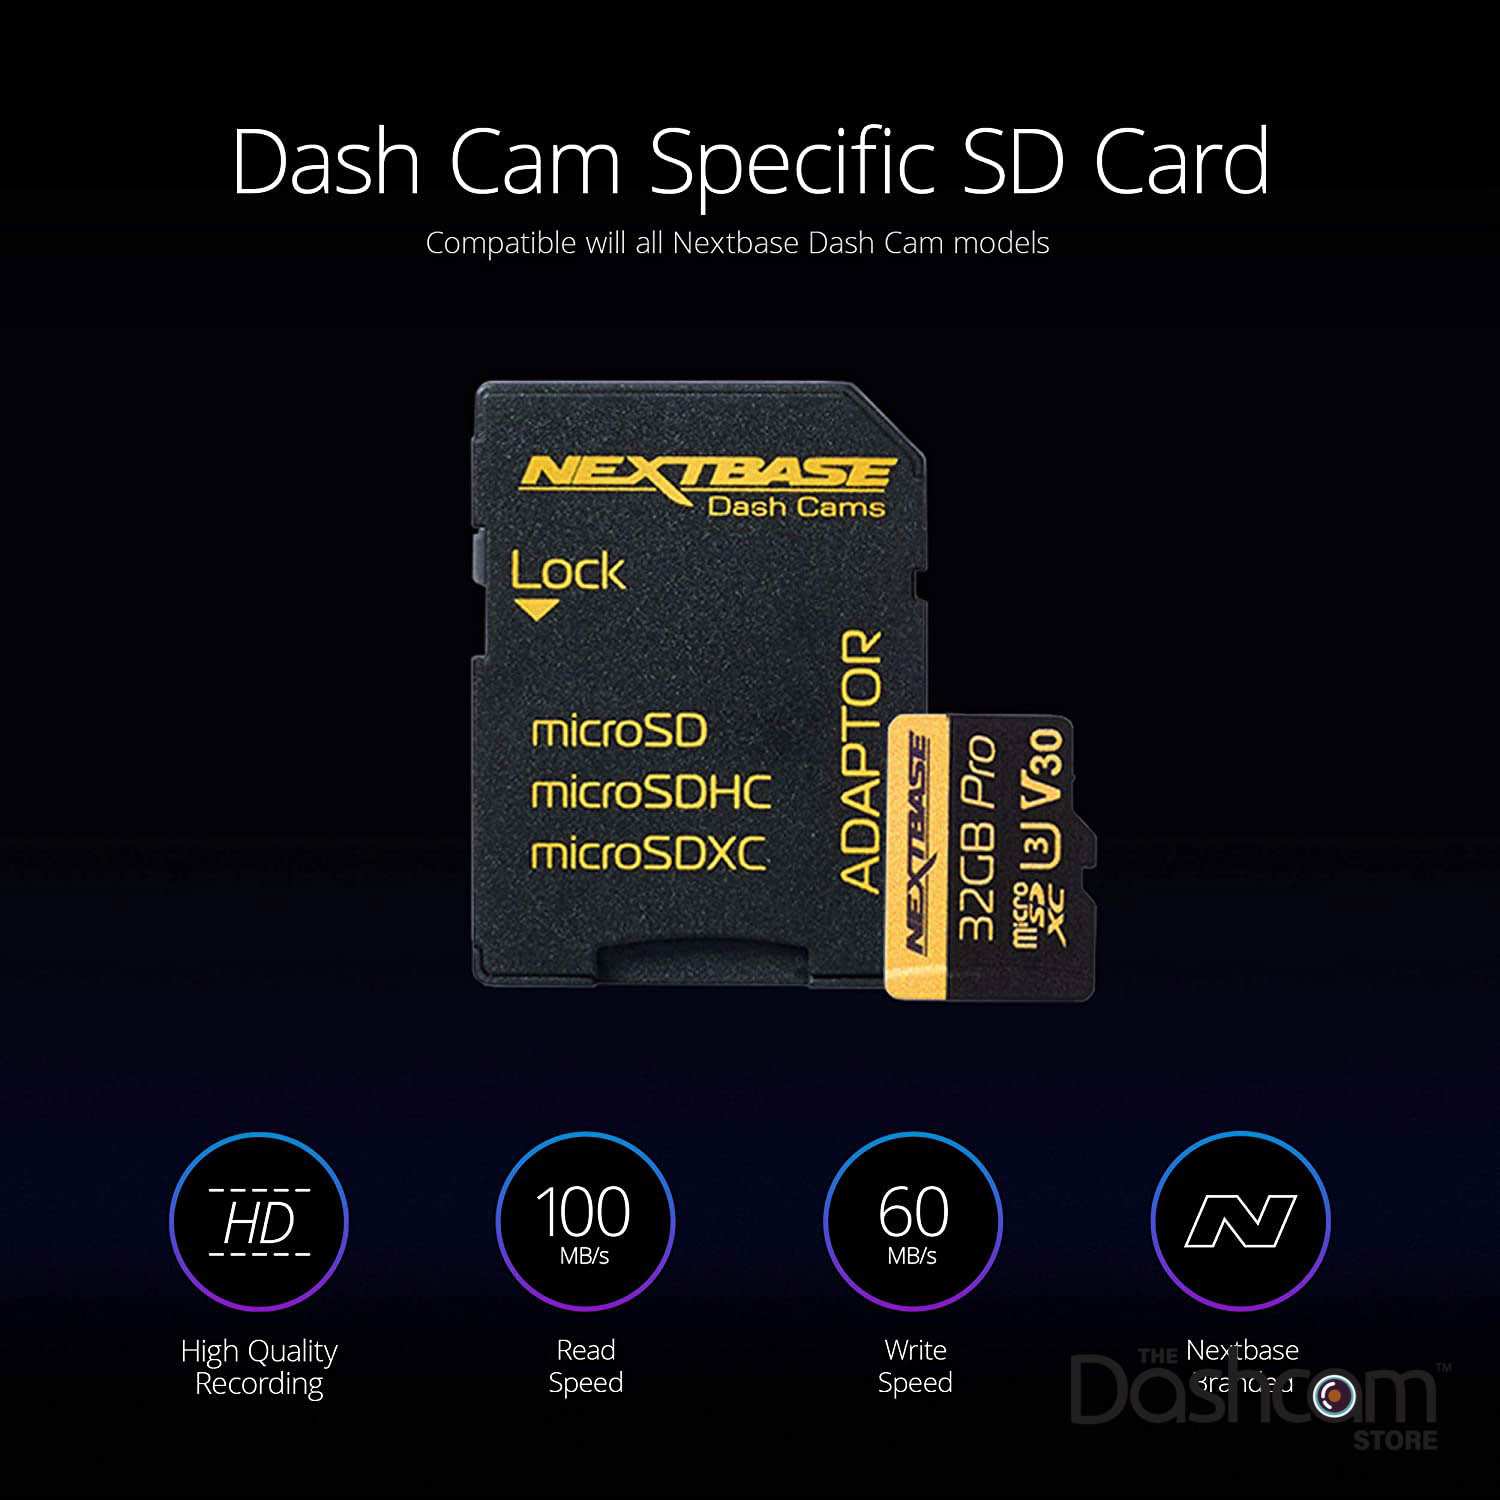 32GB U3 Industrial Grade microSD Card